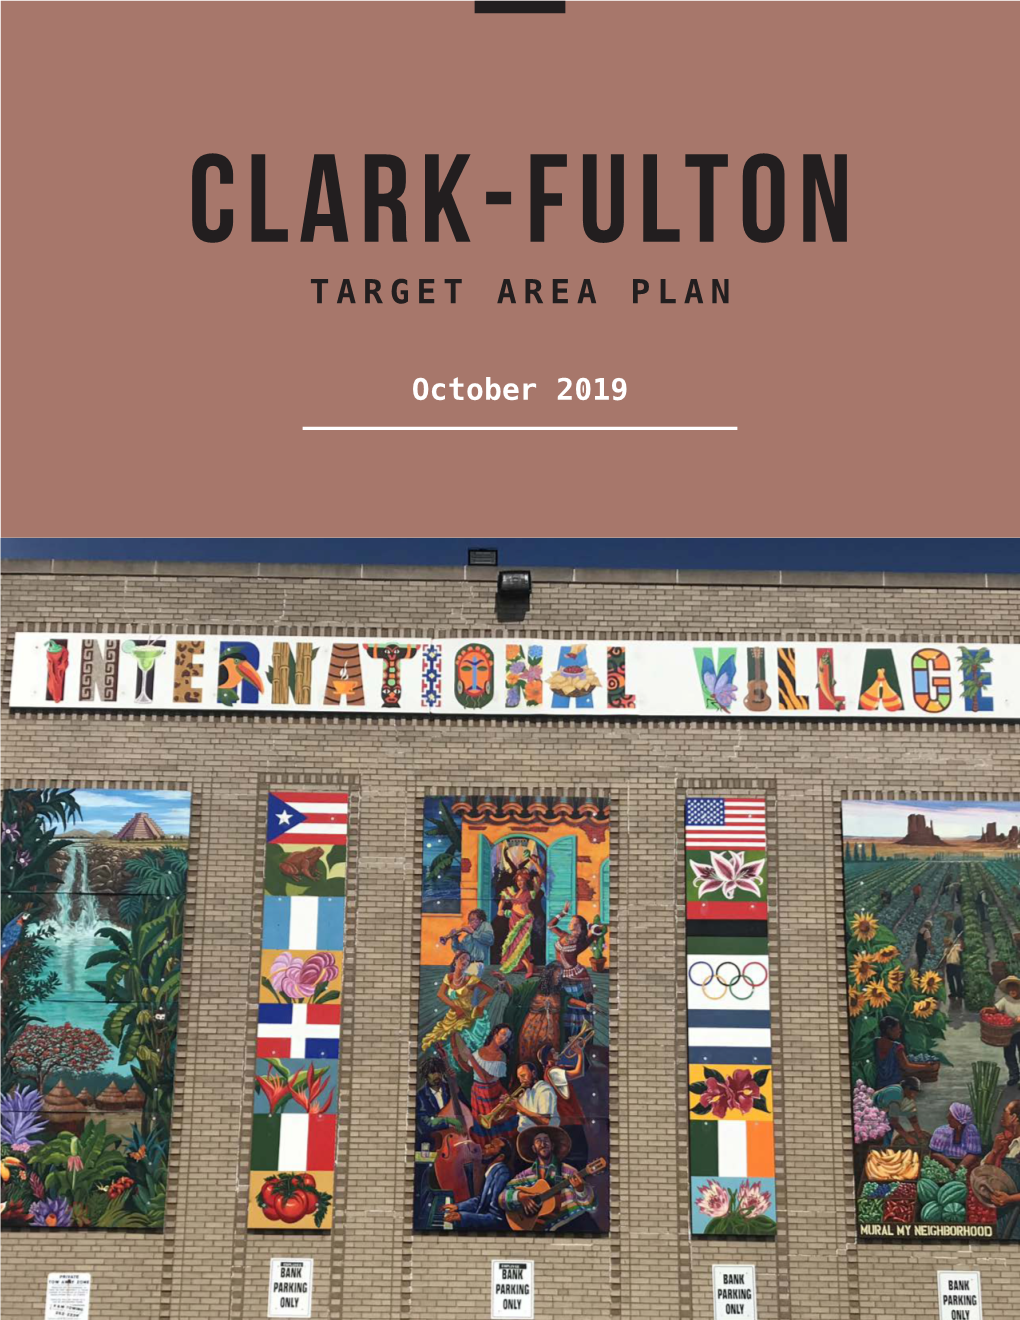 Clark-Fulton TARGET AREA PLAN